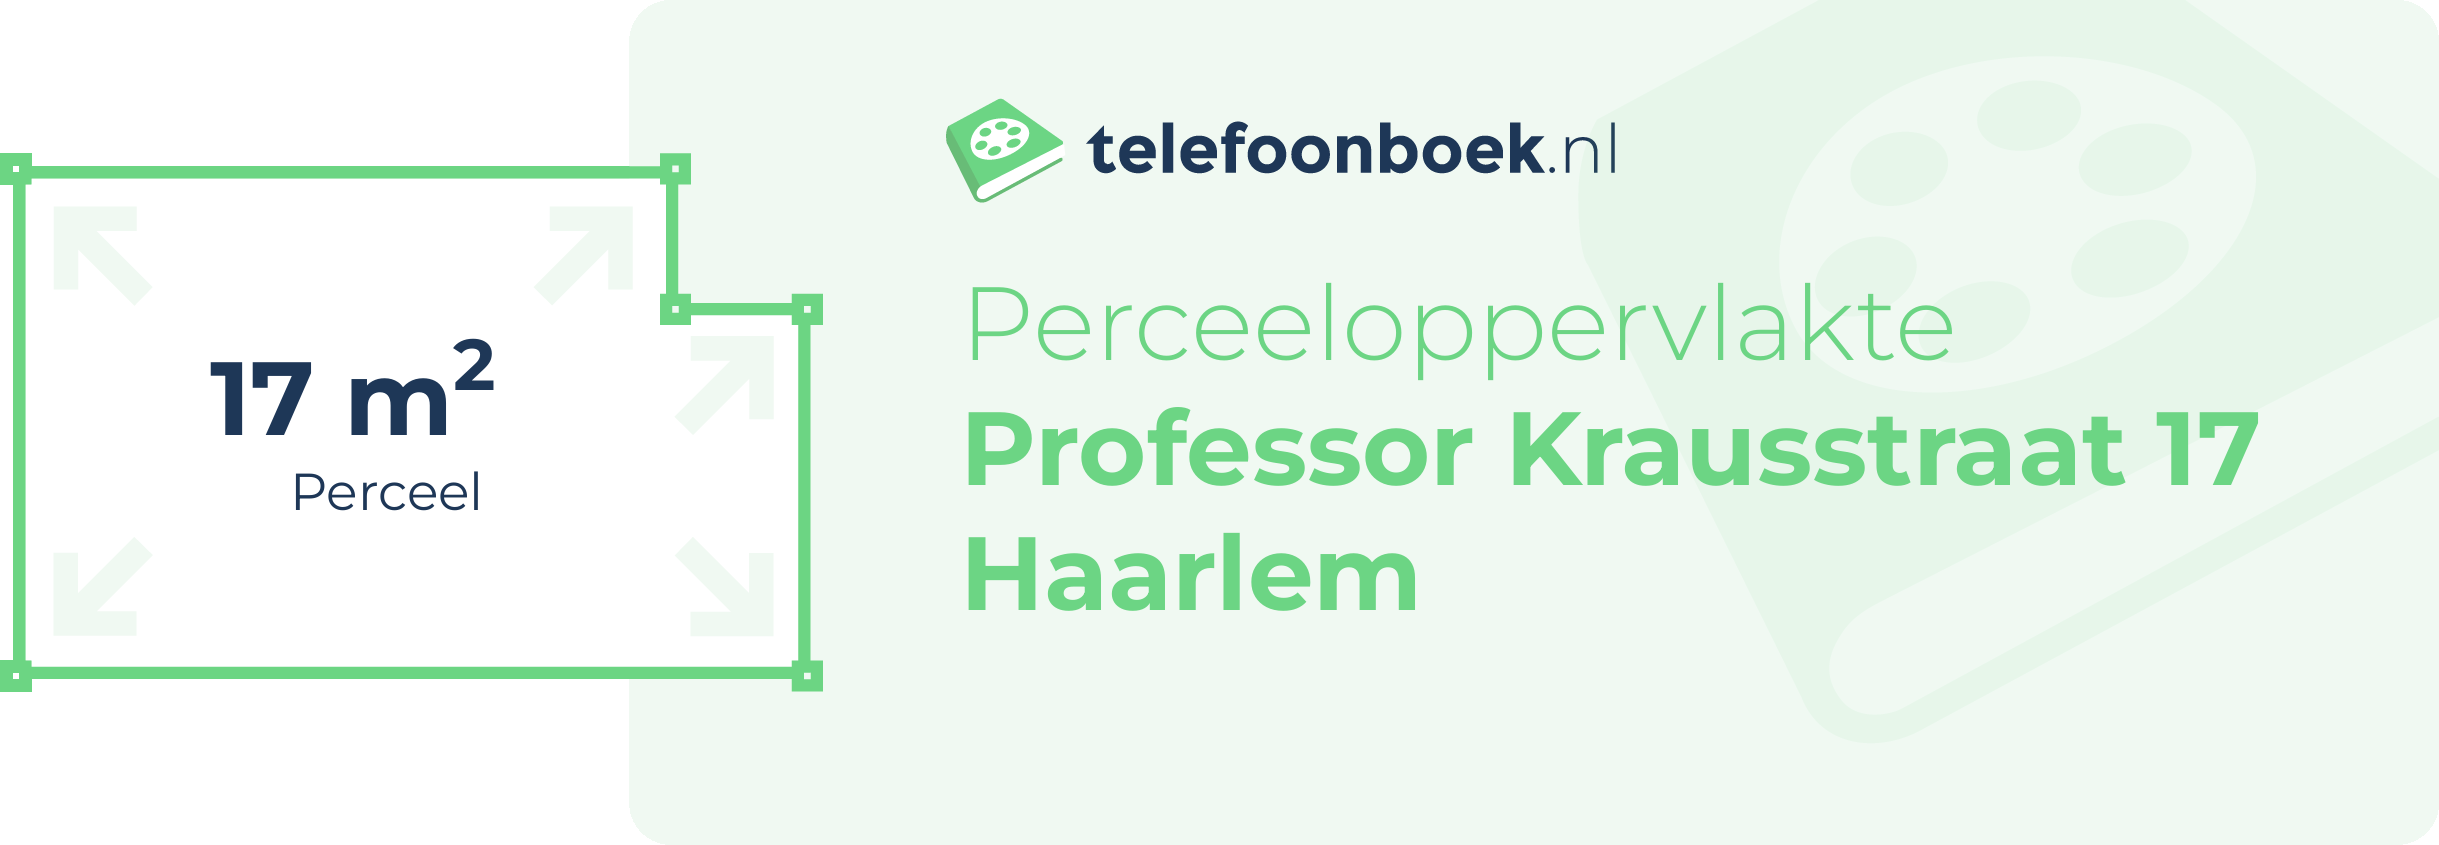 Perceeloppervlakte Professor Krausstraat 17 Haarlem